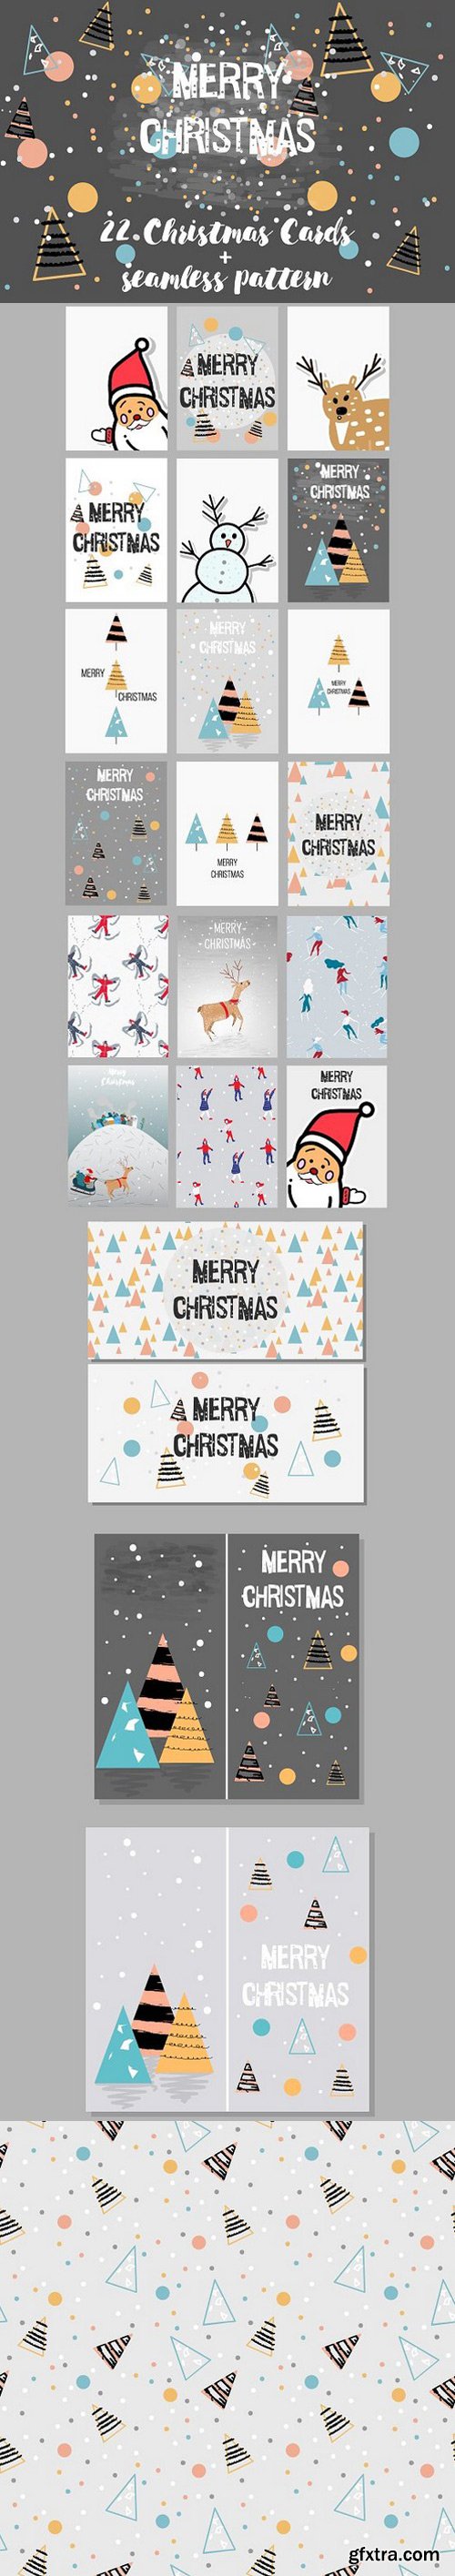 CM - Christmas hand drawn vector cards 1079288